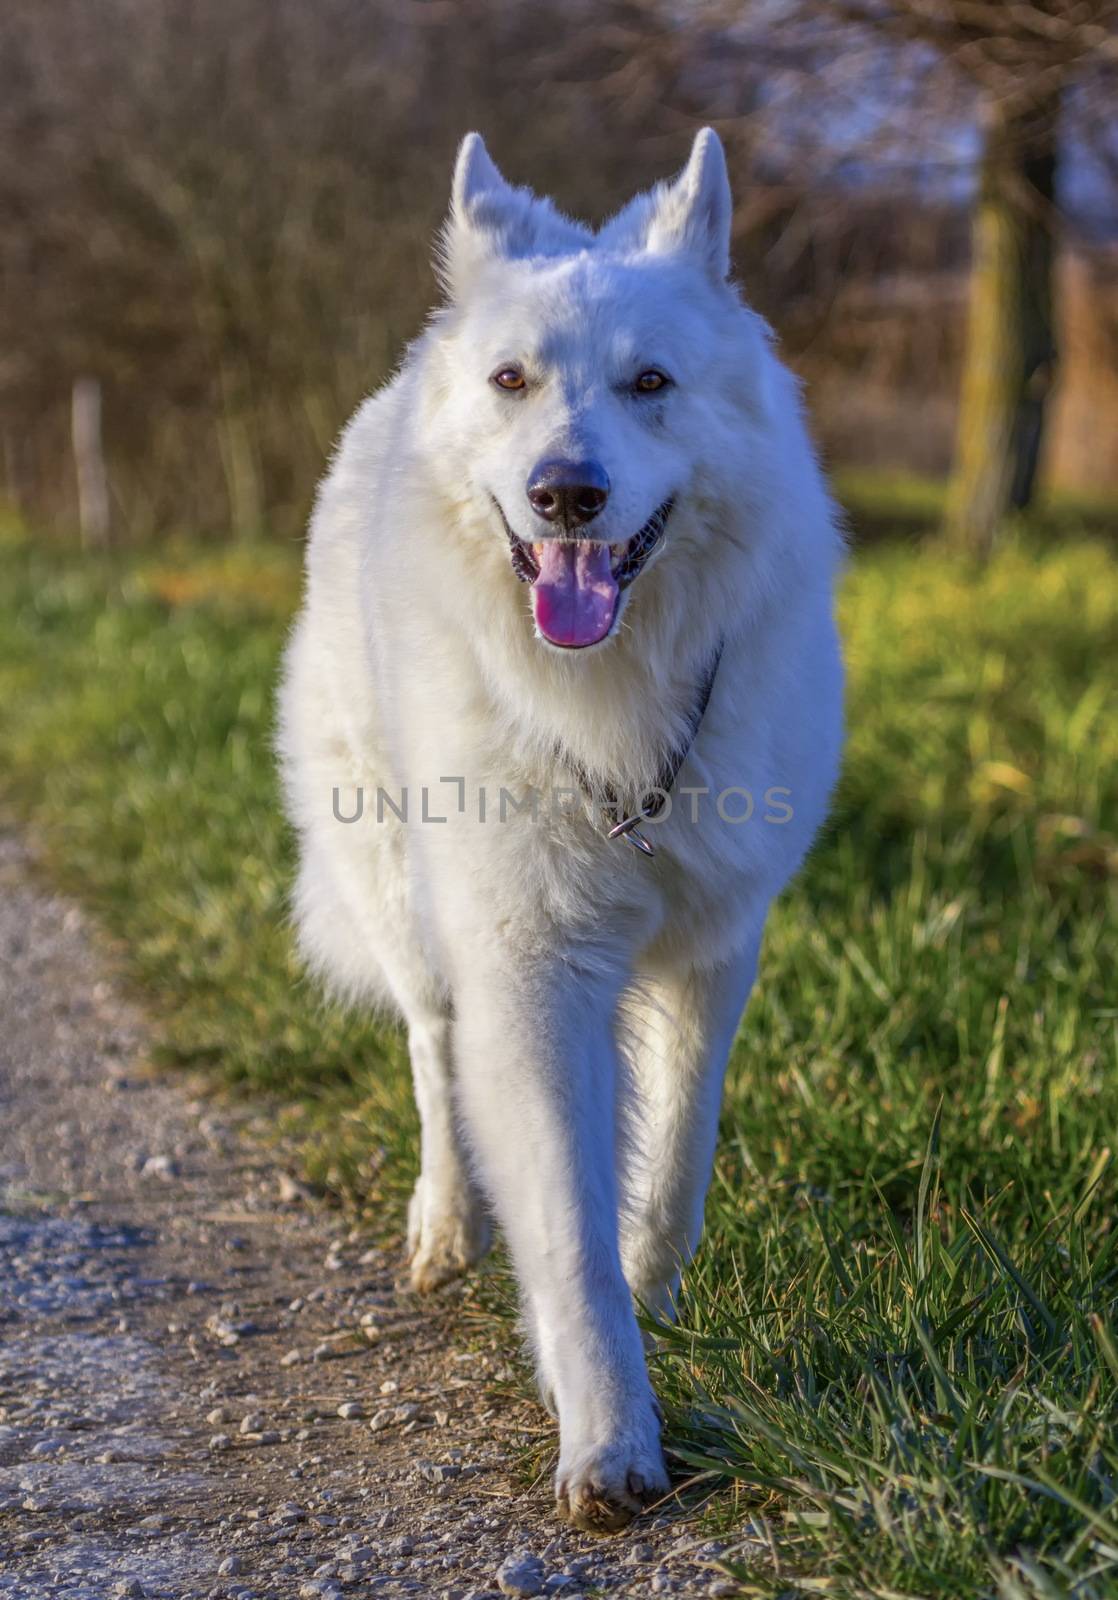 Swiss white shepherd by Elenaphotos21